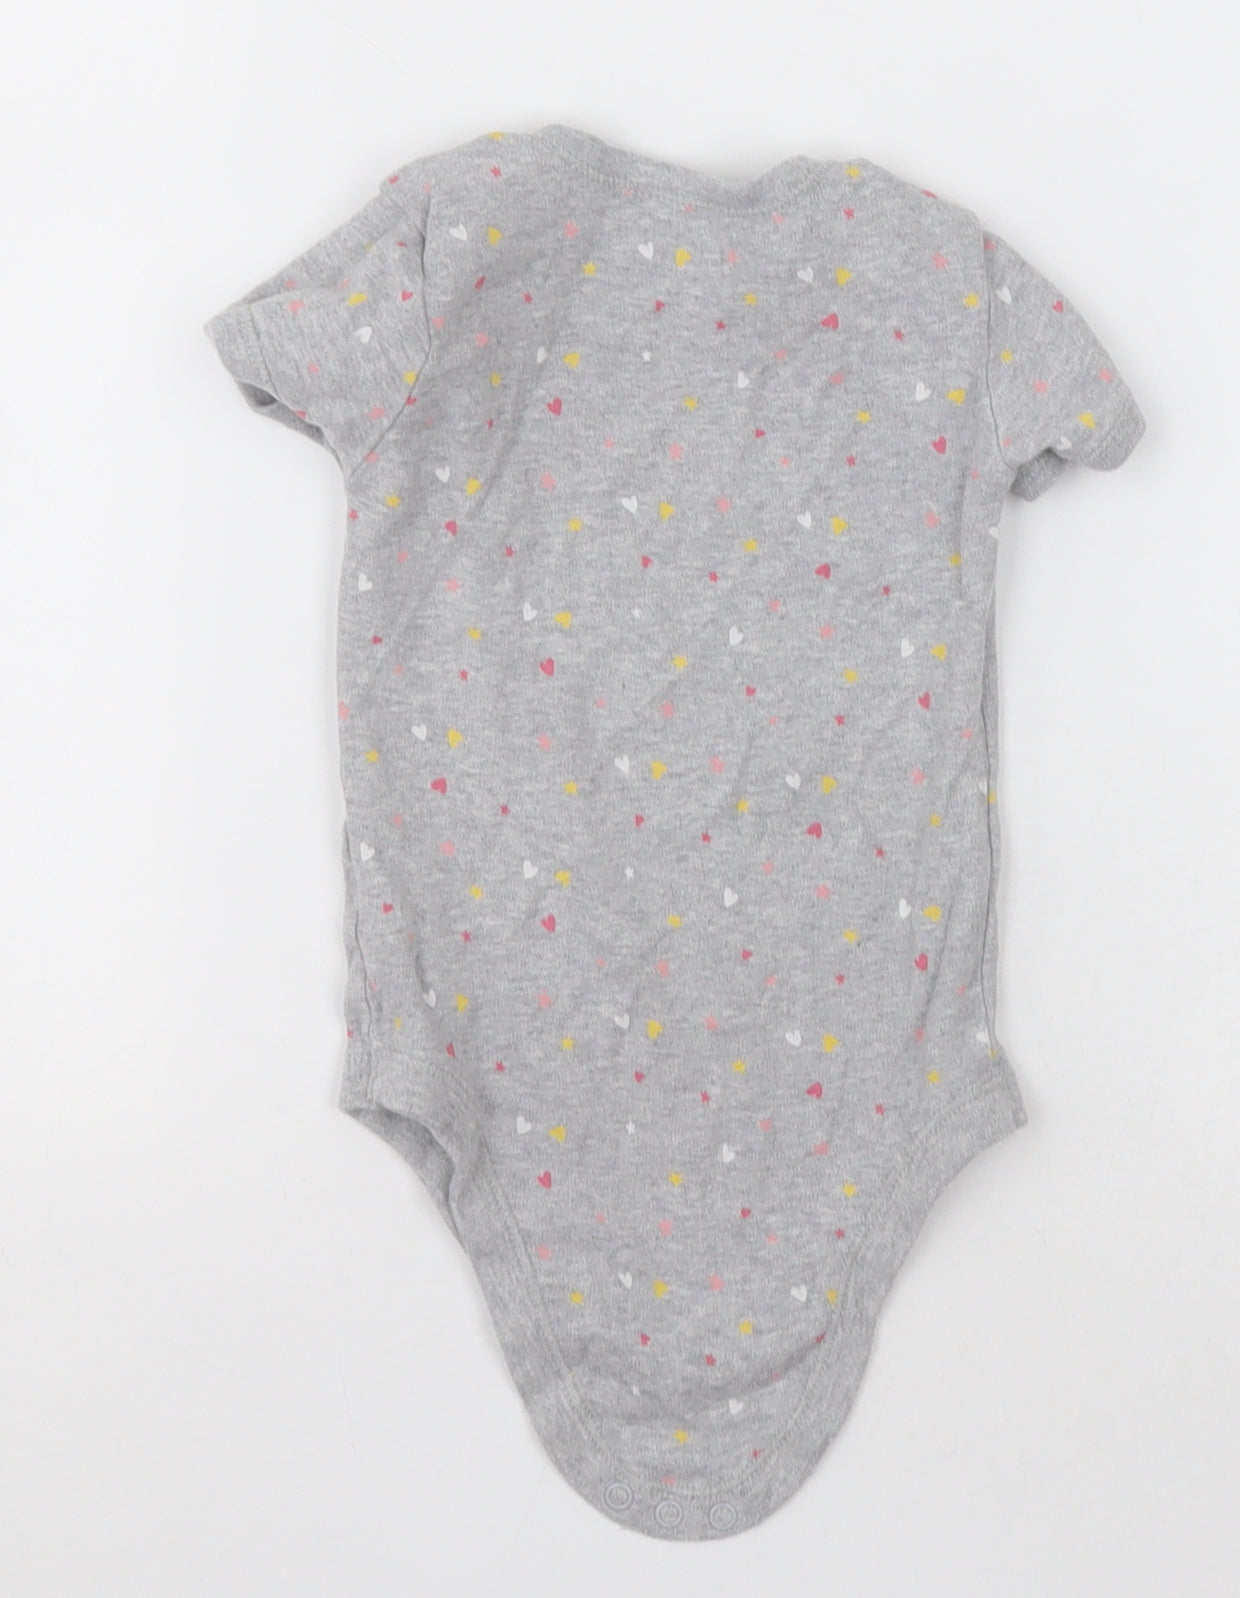 Matalan Girls Grey Polka Dot Cotton Babygrow One-Piece Size 18-24 Months  Button - Heart pattern